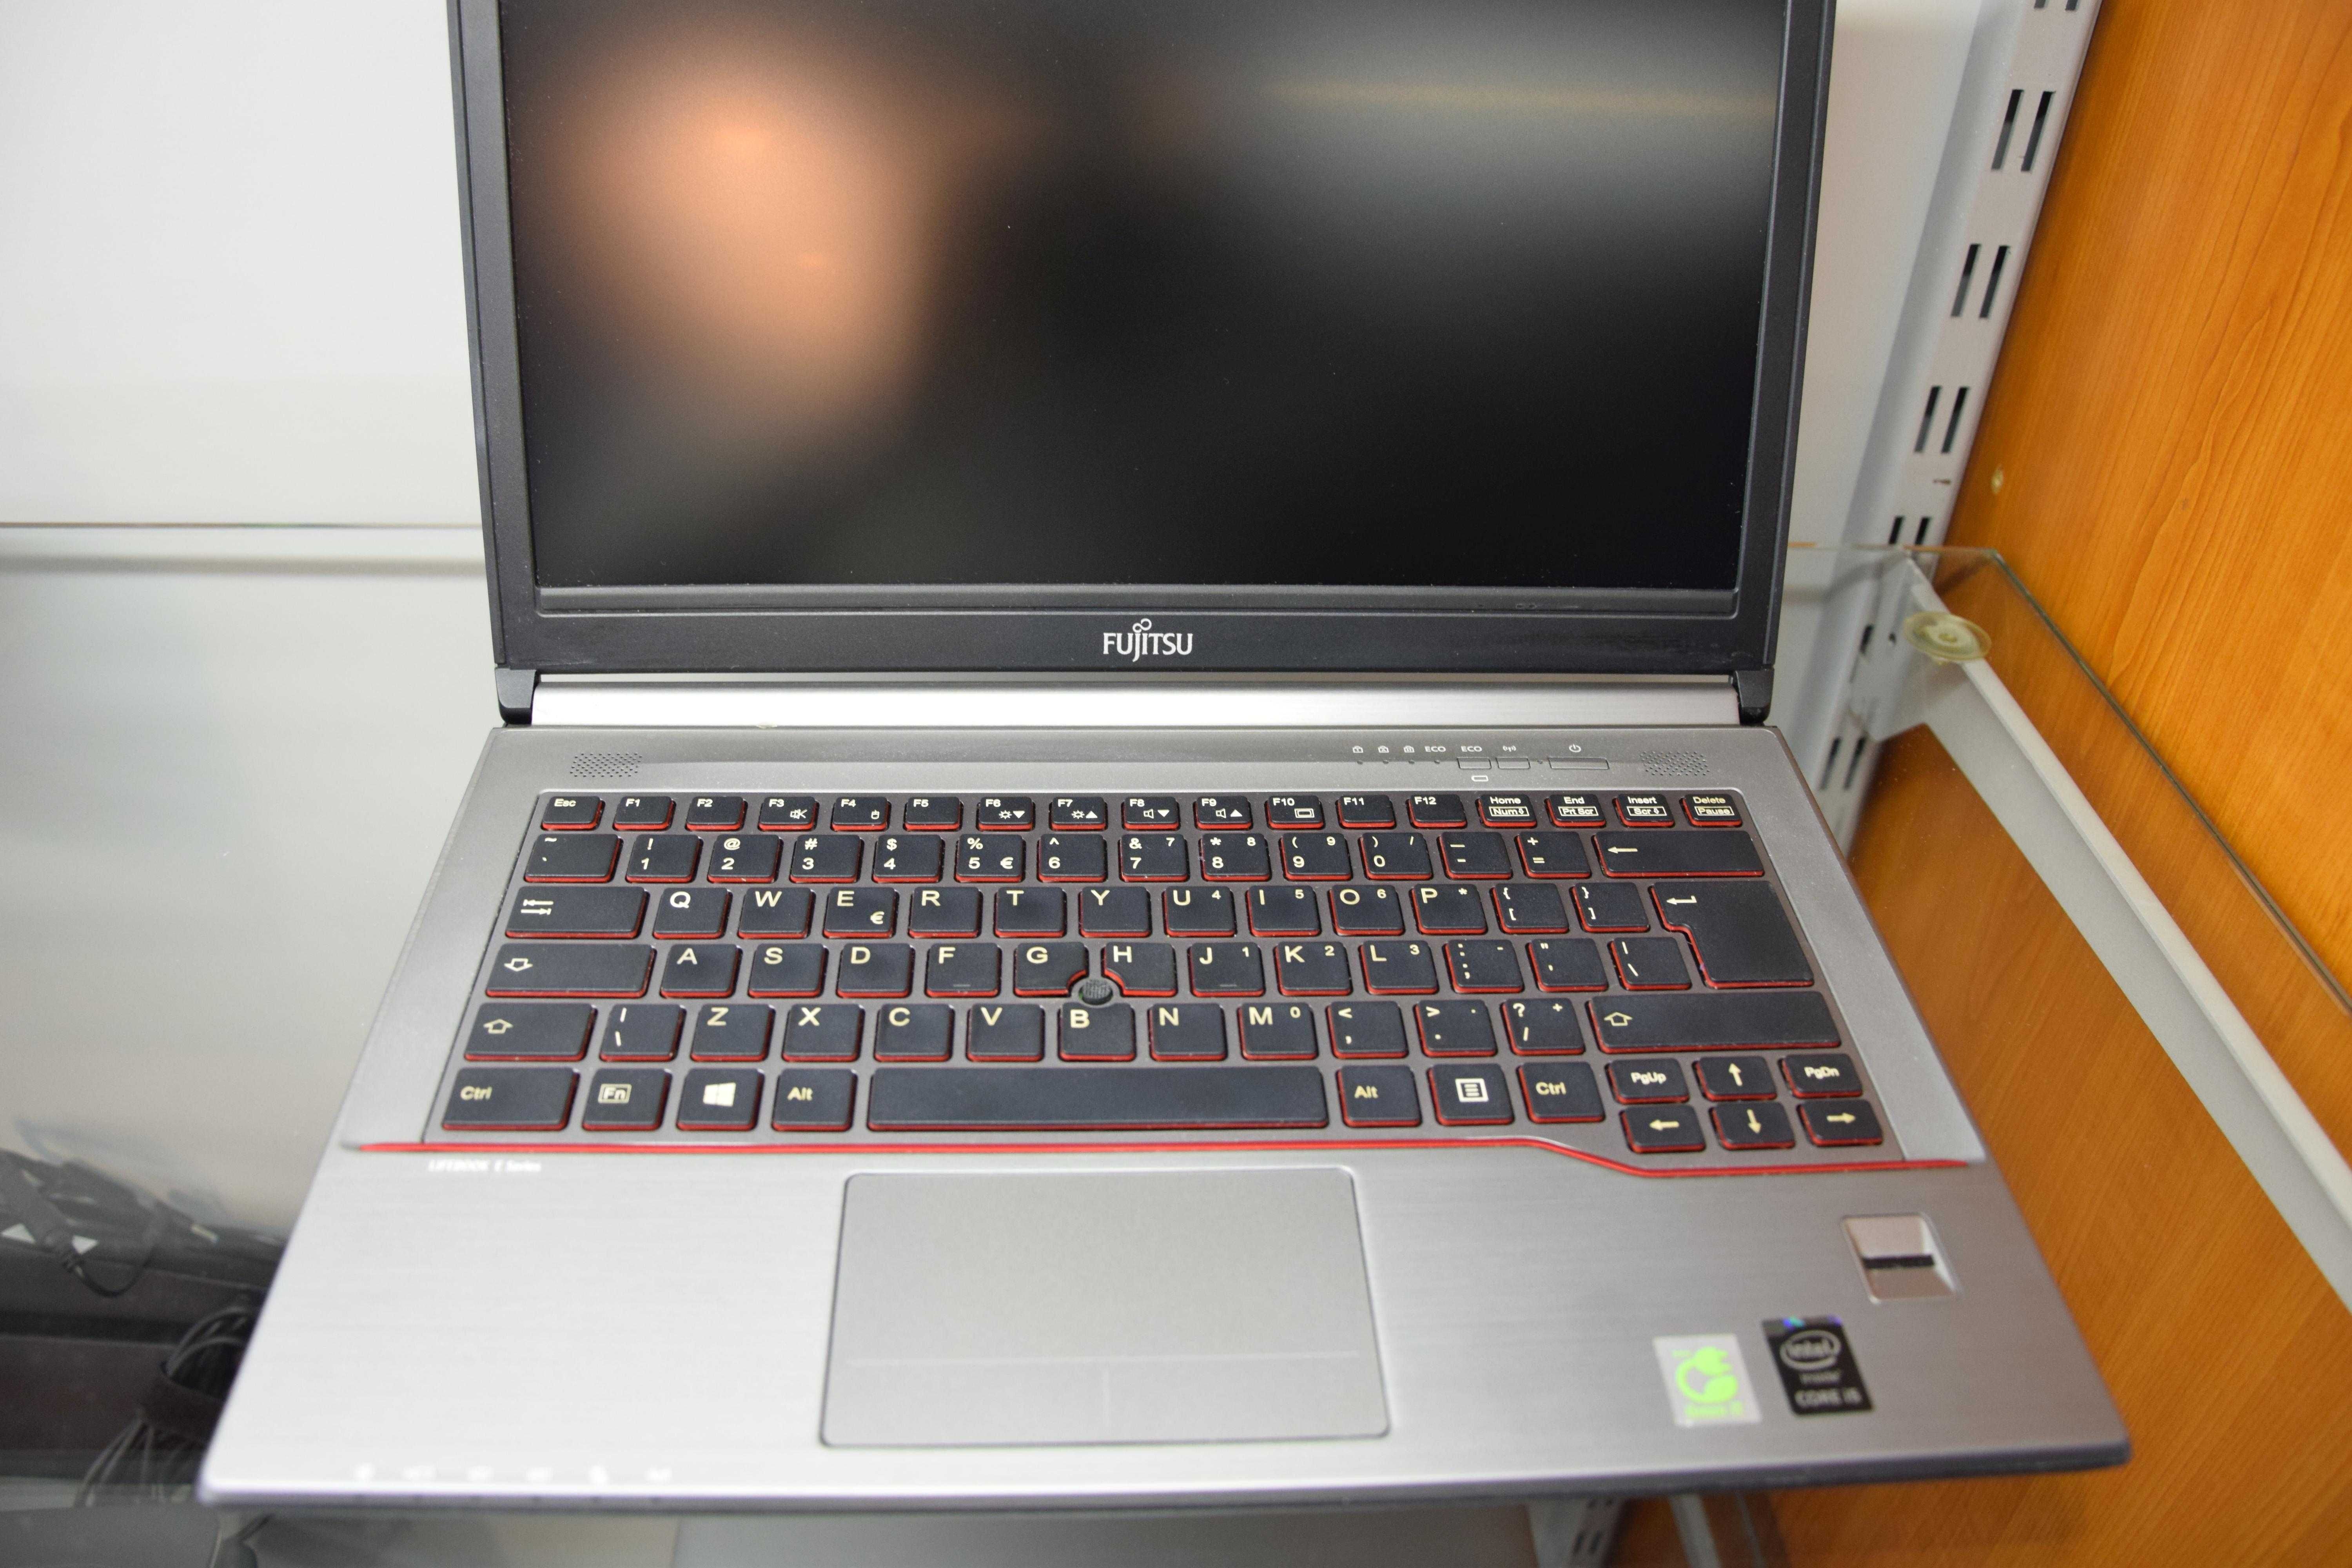 Fujitsu LifeBook E744 I5 8 GB RAM 240 GB SSD WIN11PRO - LapCenter.pl